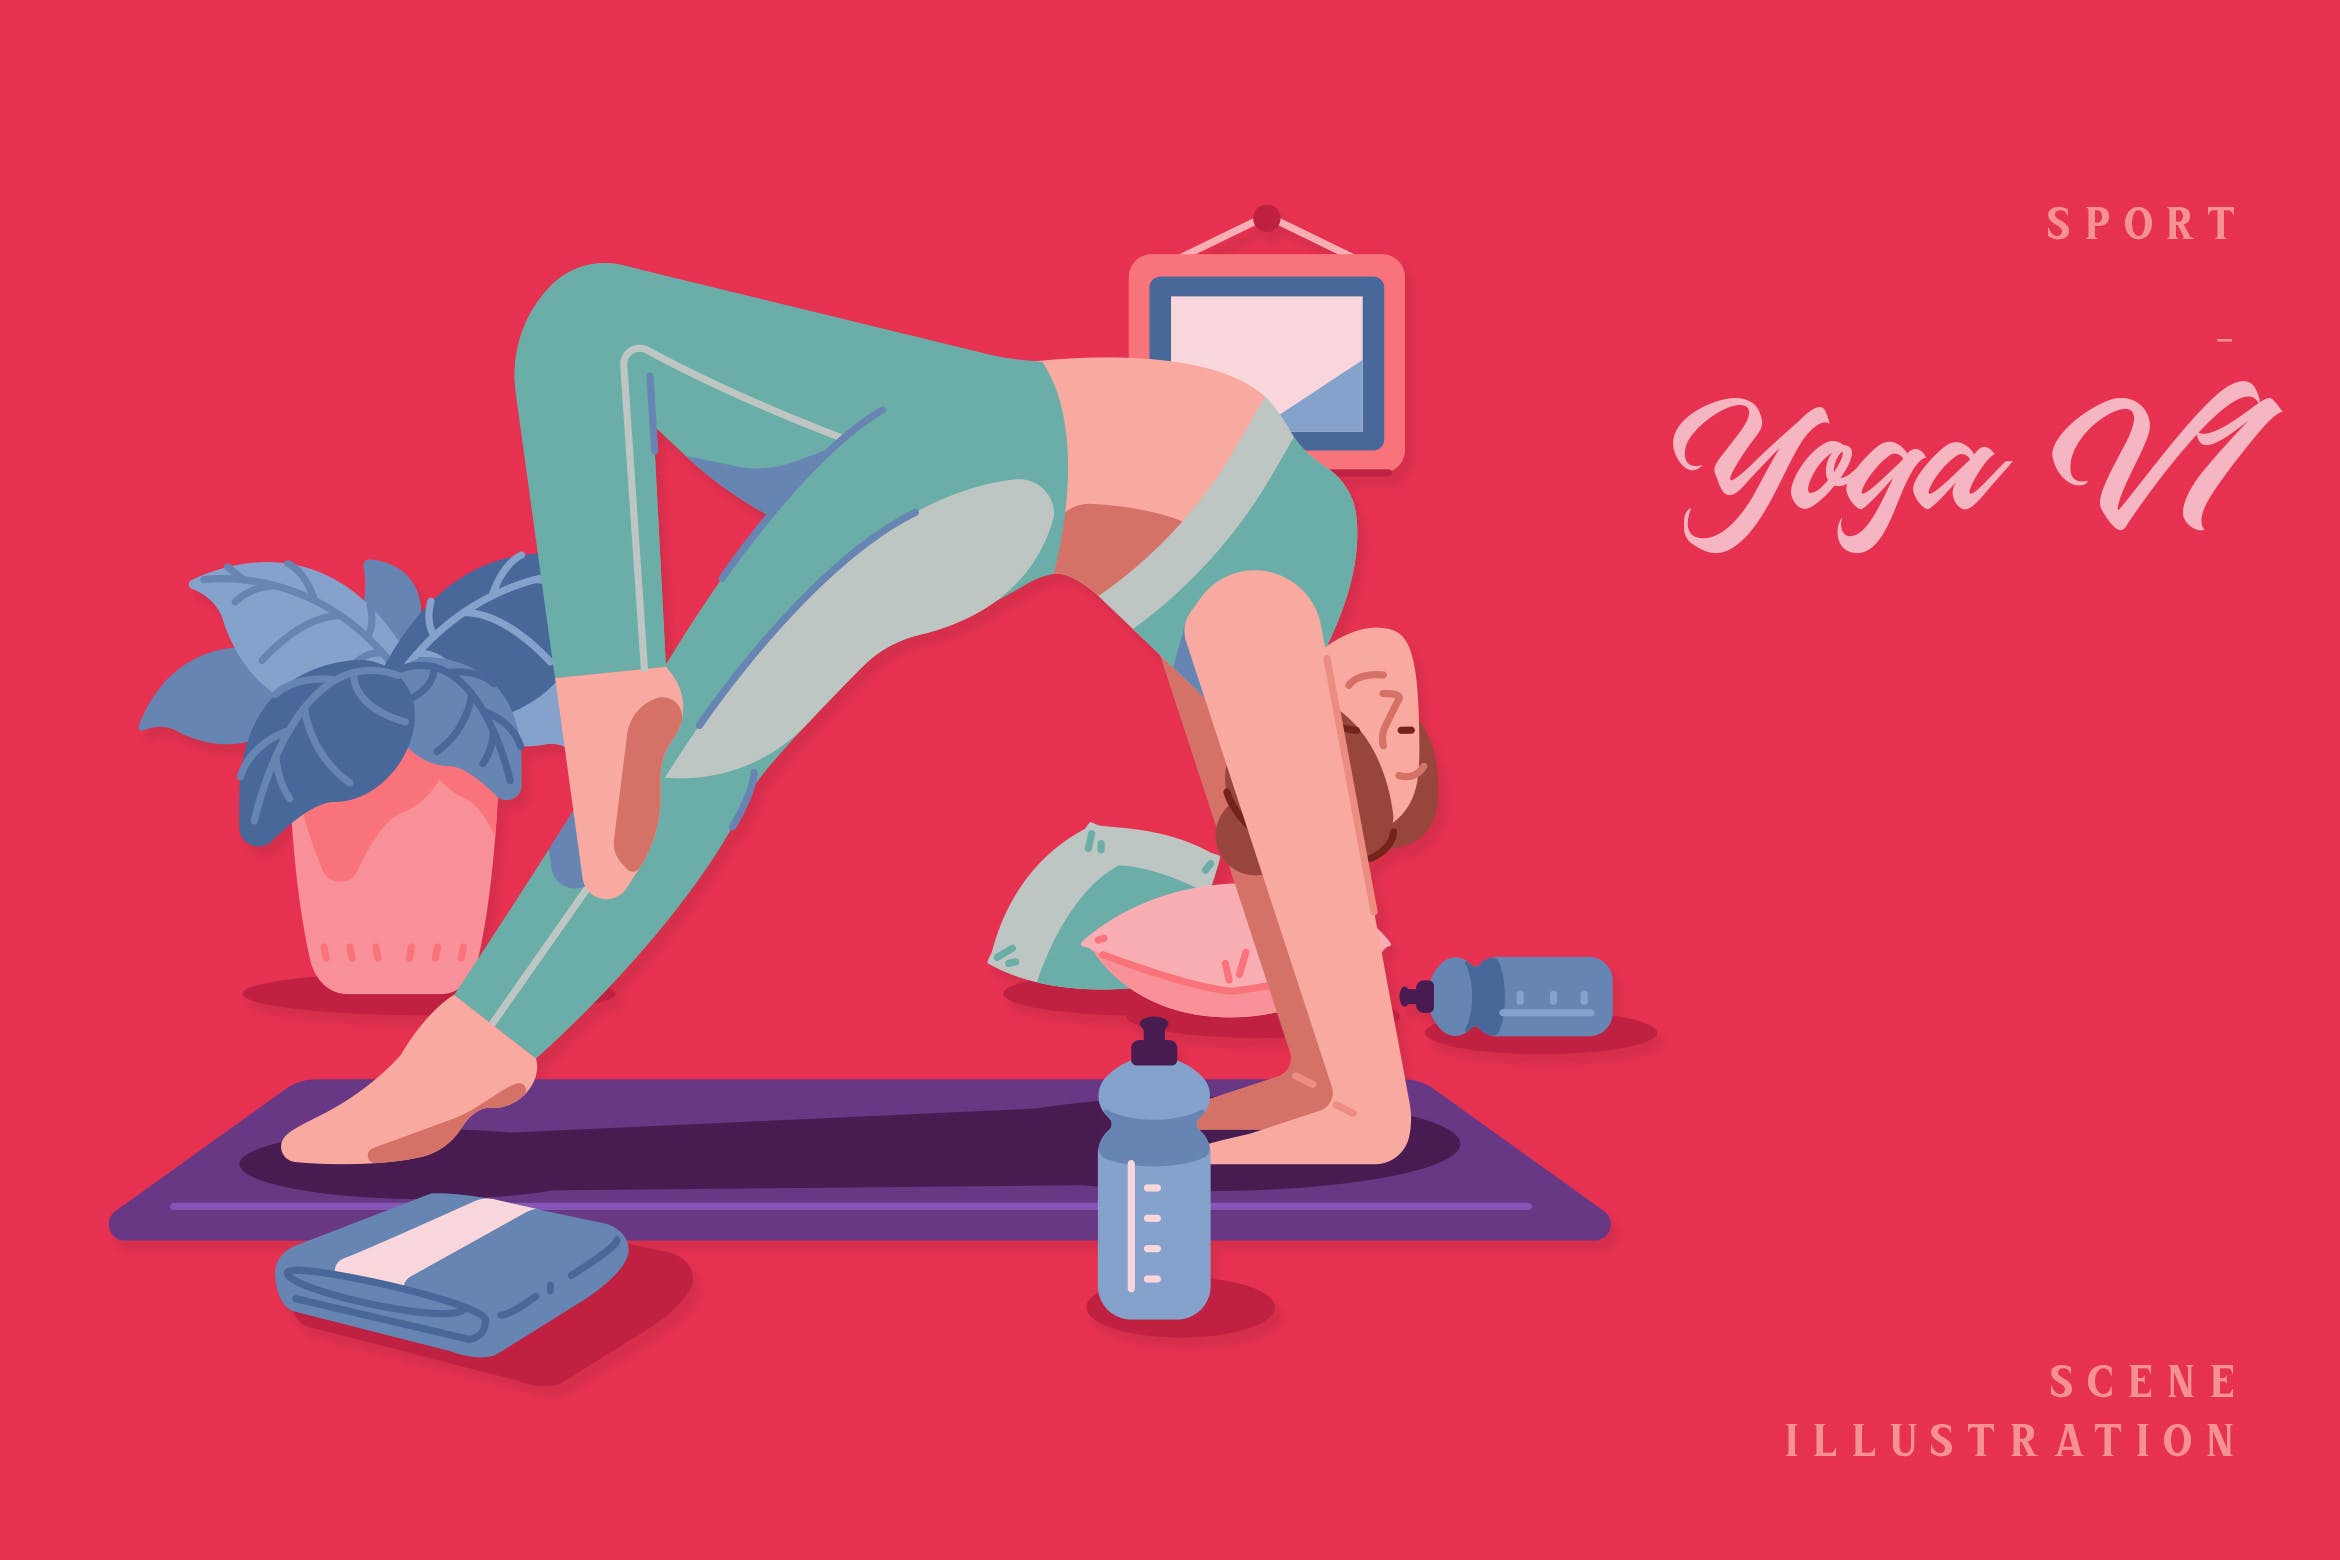 瑜伽运动场景插画v1 Sport – Yoga V1 Scene Illustration 图片素材 第1张